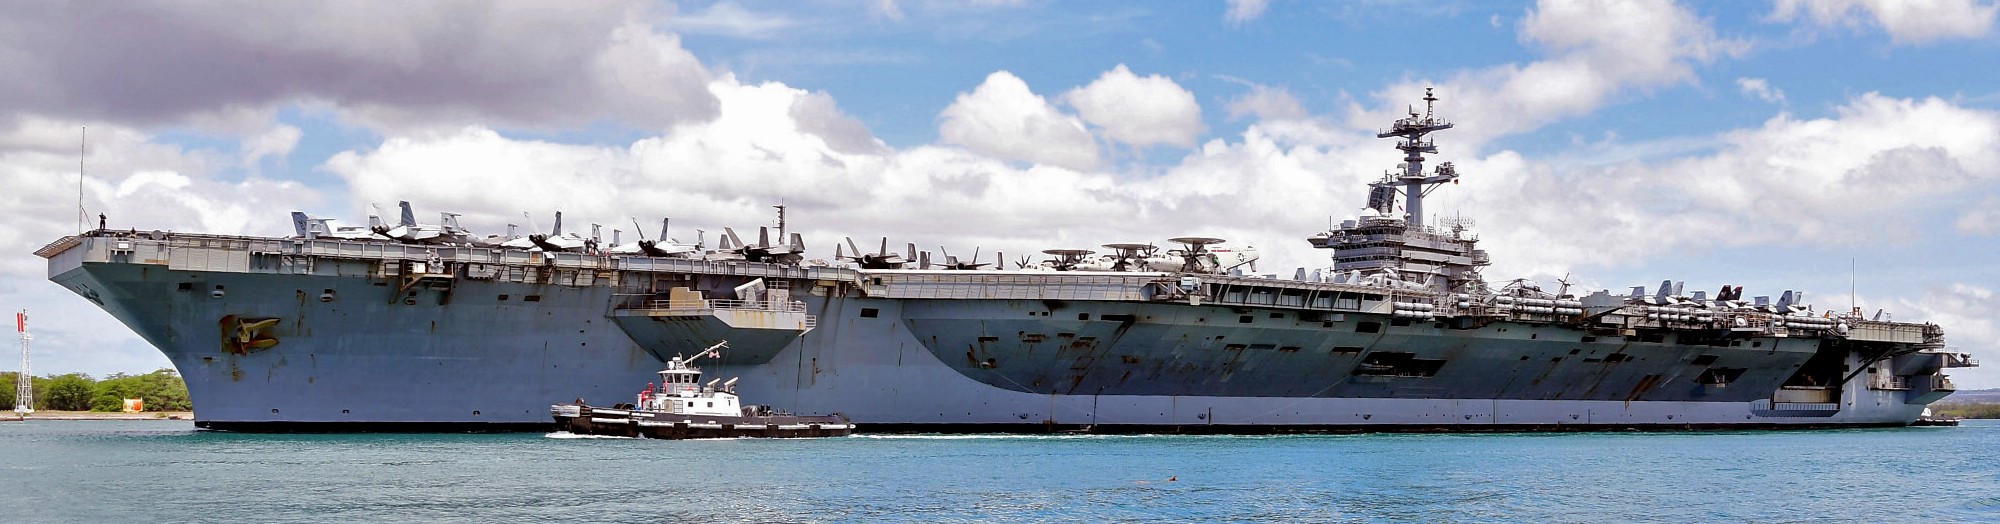 cvn-72 uss abraham lincoln nimitz class aircraft carrier air wing cvw-9 us navy 07 joint base pearl harbor hickam hawaii